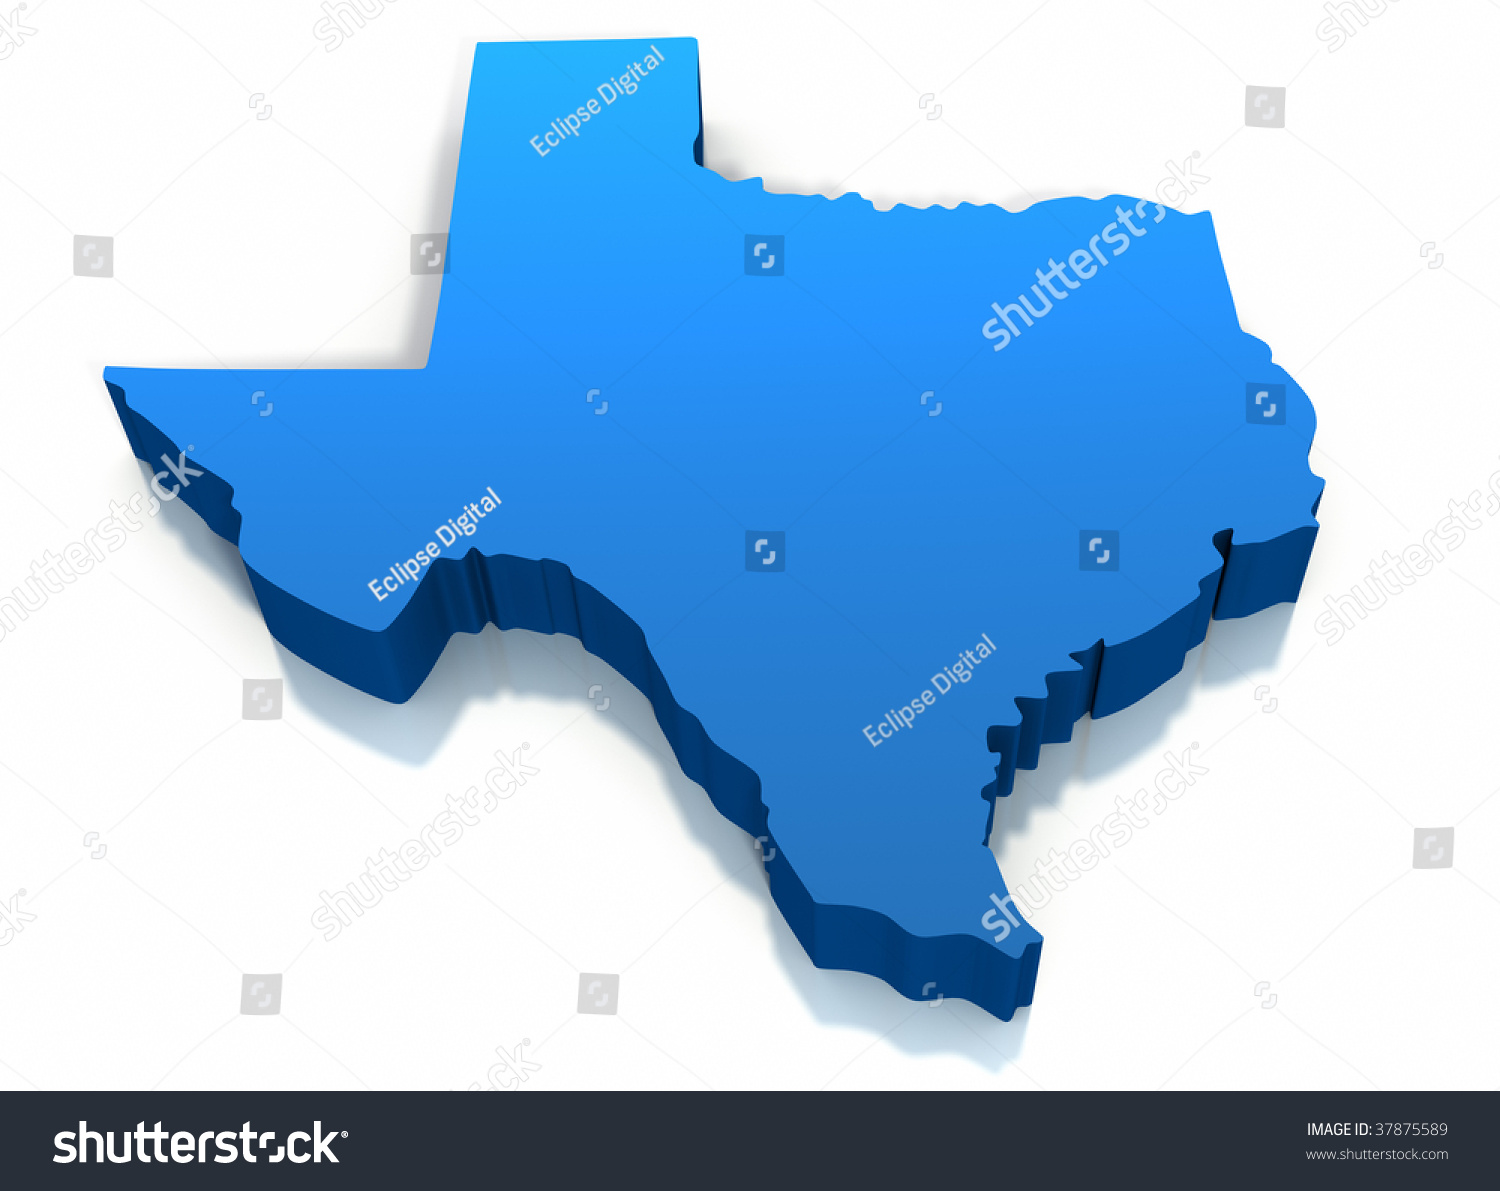 United States Texas Map Outline On Stock Illustration 37875589 Shutterstock 8356